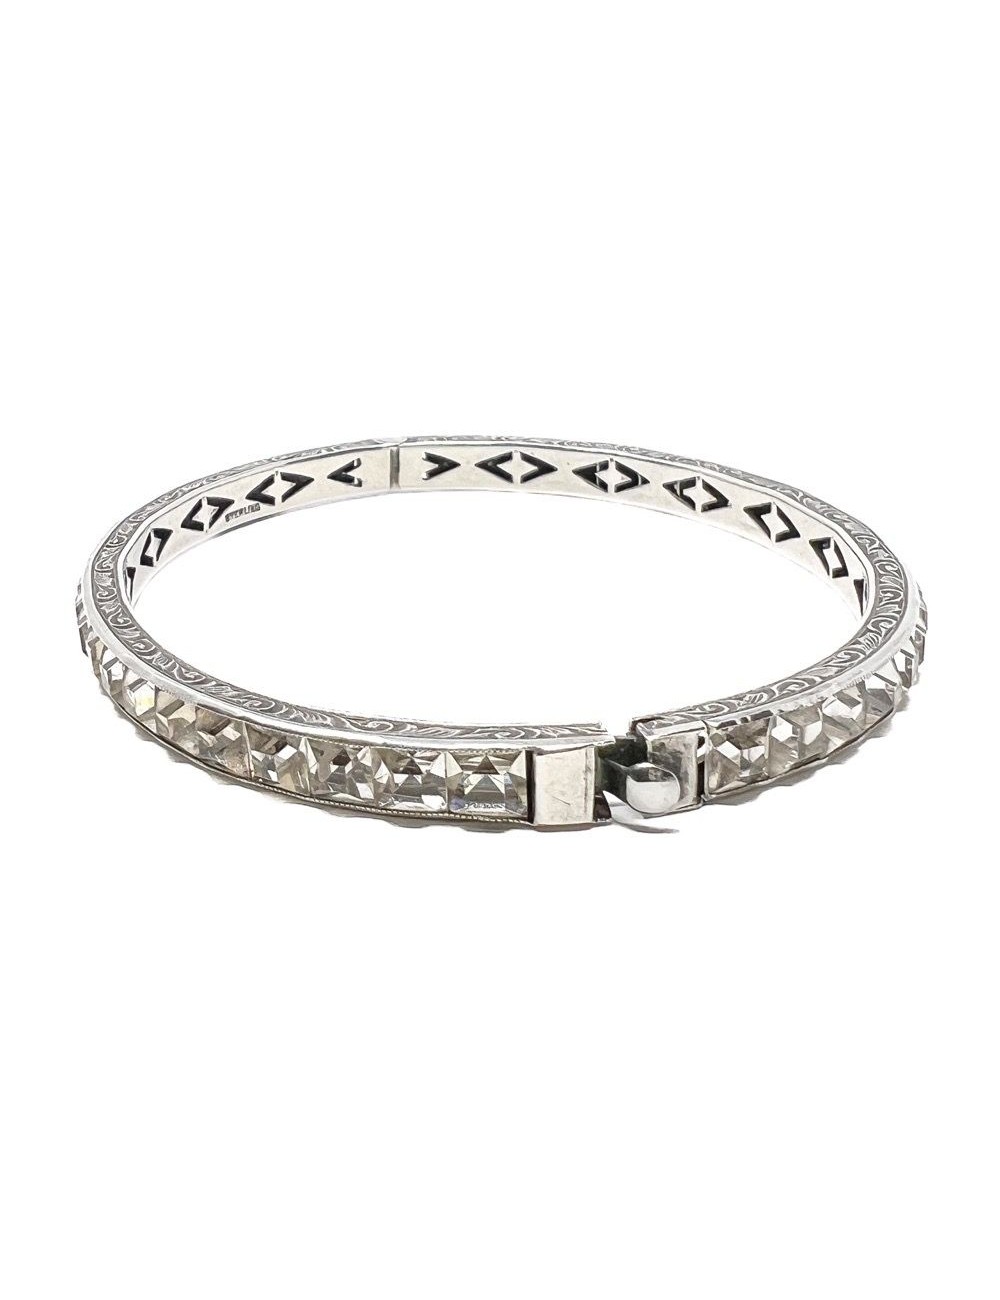 Men 925 Sterling Silver plated Thai Handmade Open Bangle Twisted Cuff  Bracelet | eBay